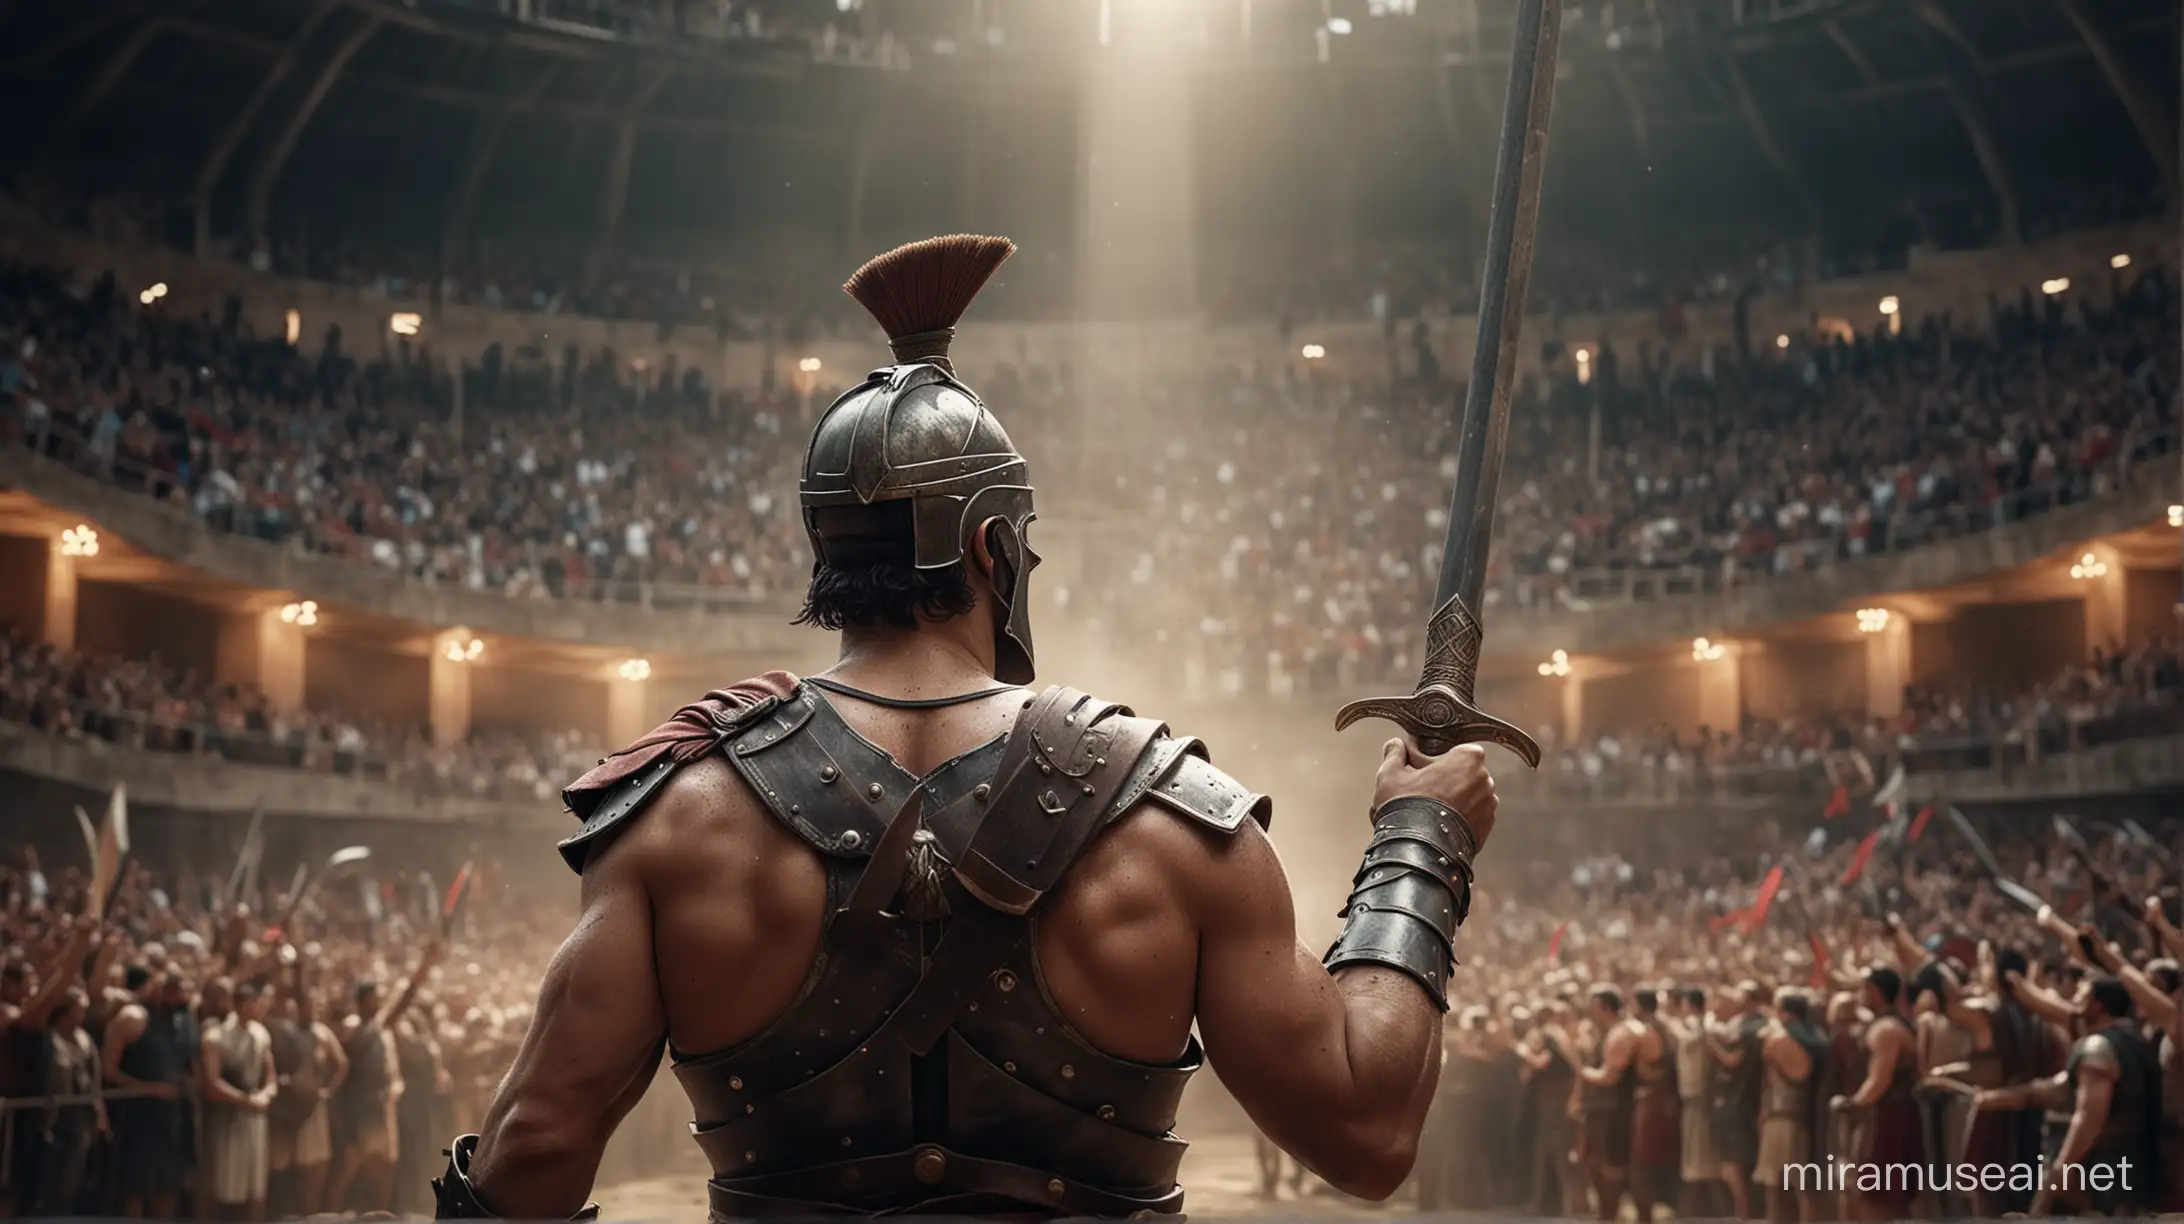 Victorious Gladiators Heroic Pose in Ancient Roman Arena